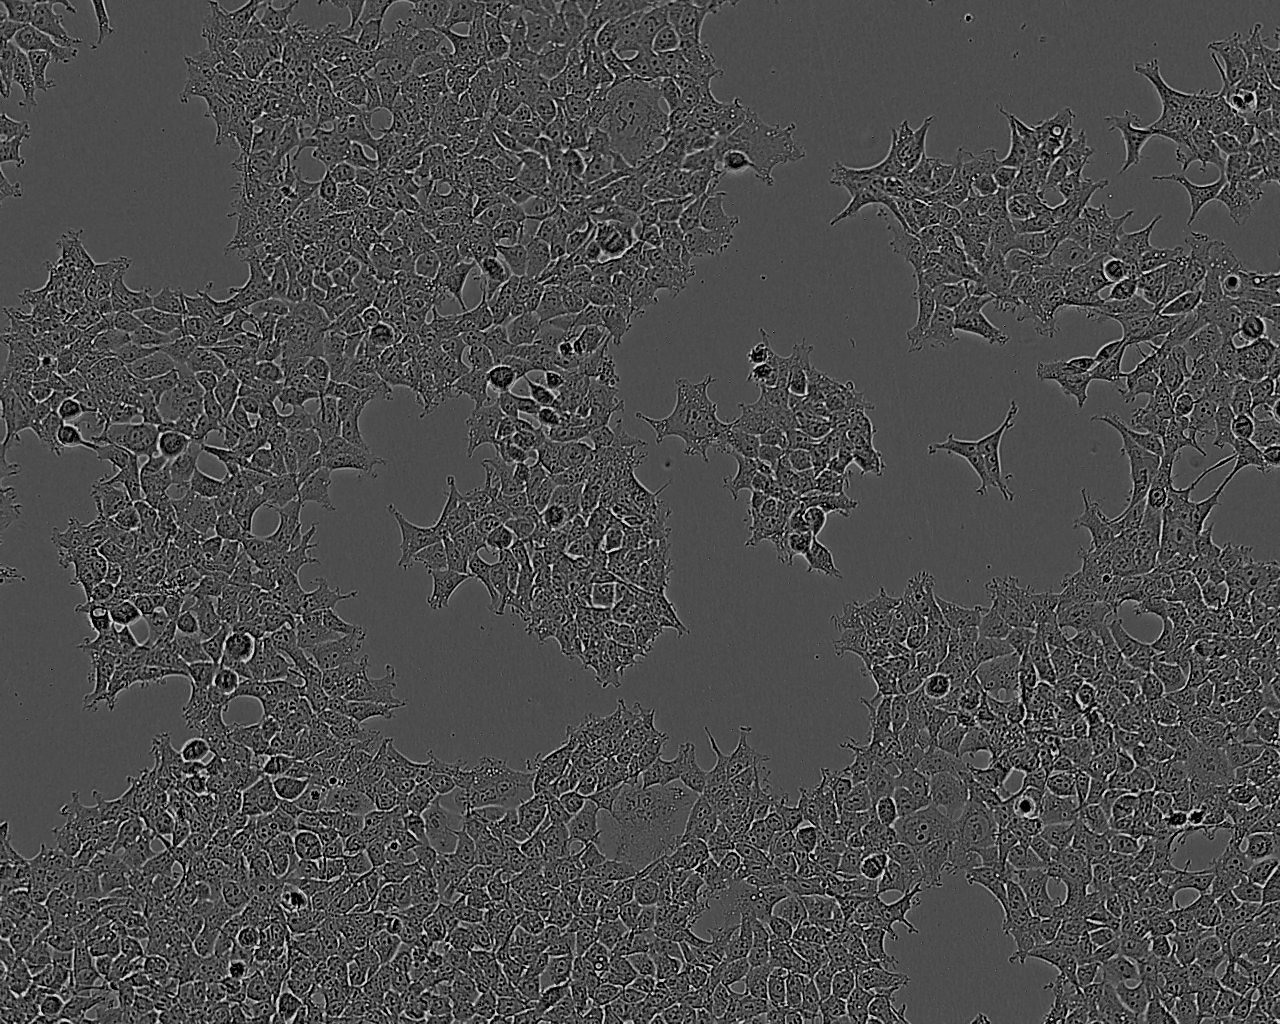 ARPE-19 Cells|人视网膜色素上皮需消化细胞系,ARPE-19 Cell